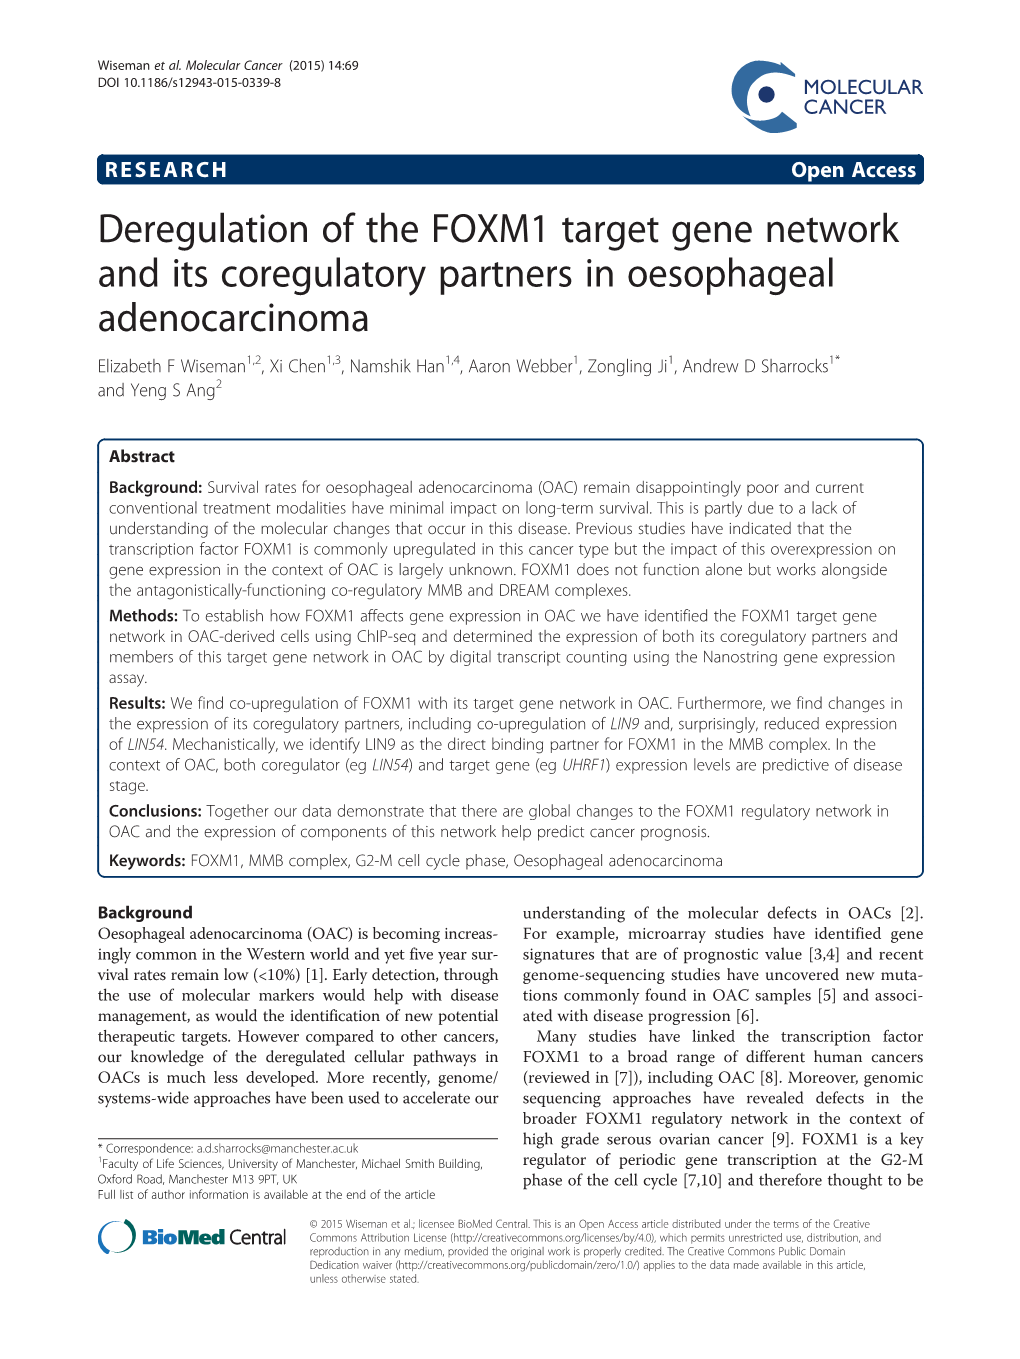 Deregulation of the FOXM1 Target Gene Network and Its Coregulatory